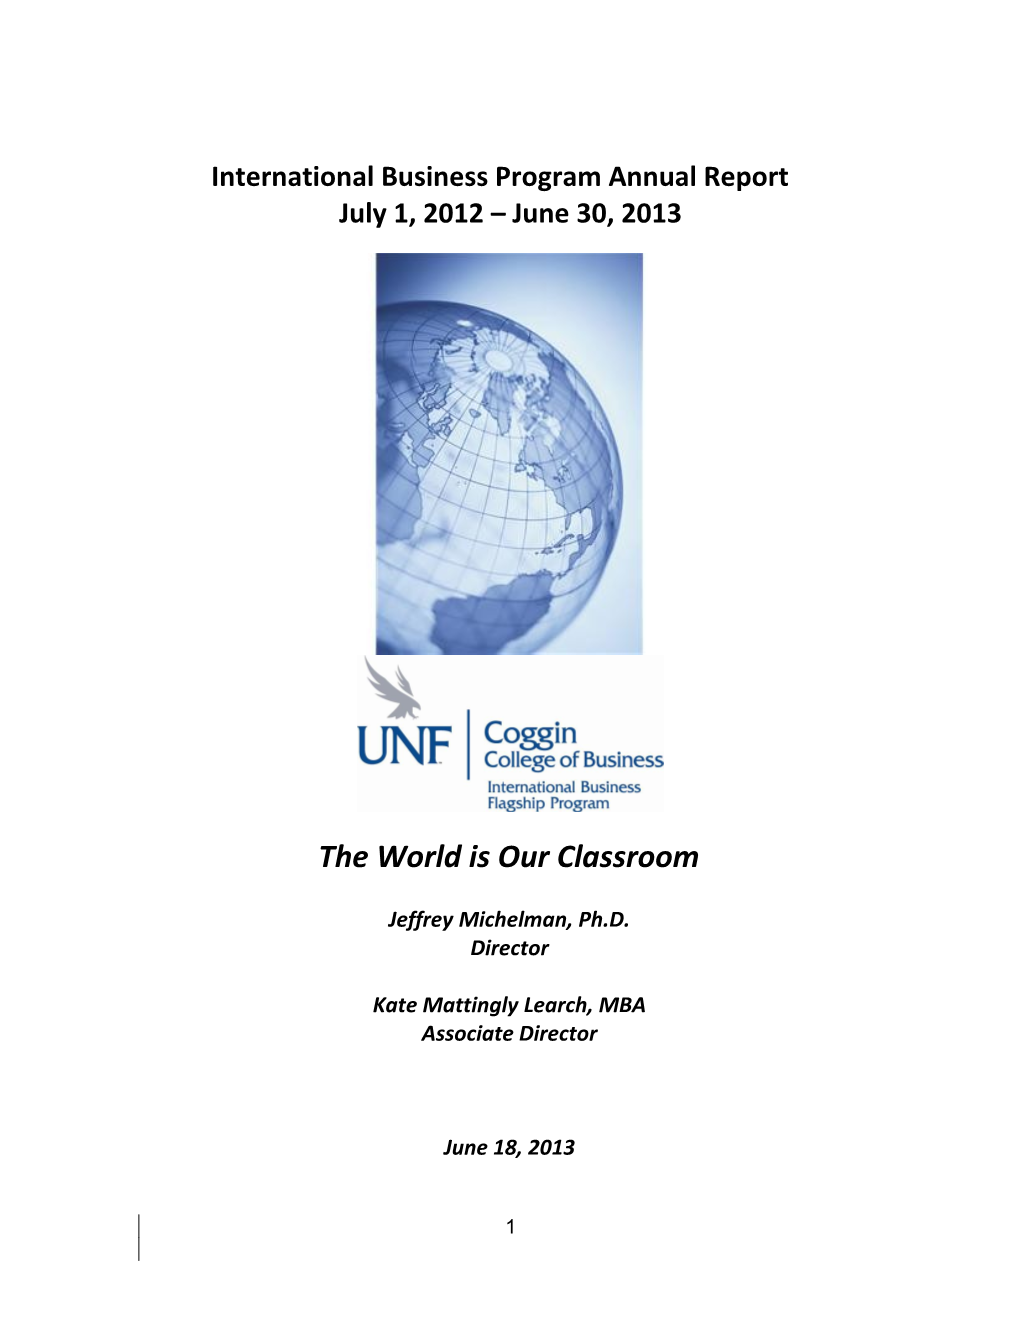 International Business Program Annual Report, May 2006 December 2007